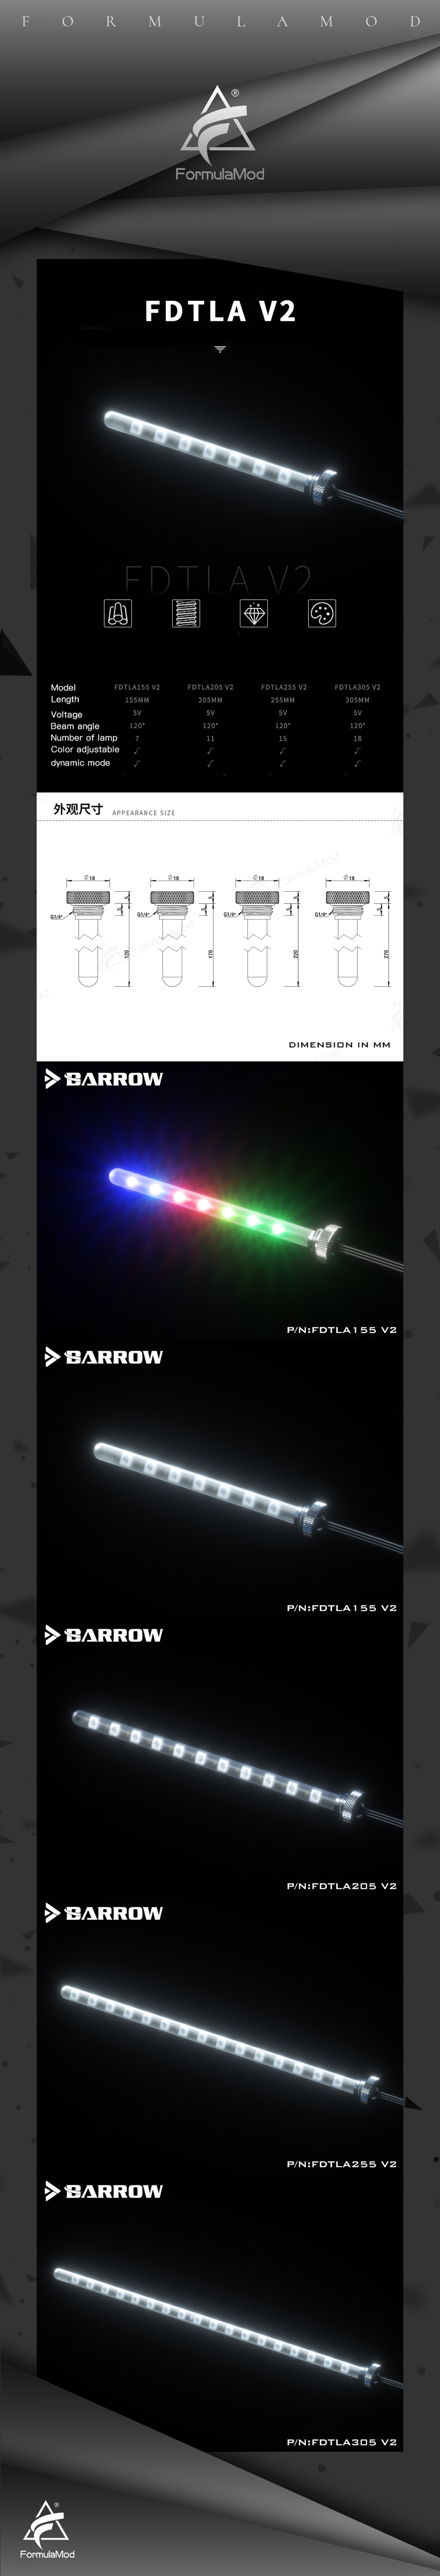 Barrow LRC2.0(5v 3pin) LED Reserovir Lighting Strips, Glass/Matte Switchable Multiple Colors, FDTLA V2  